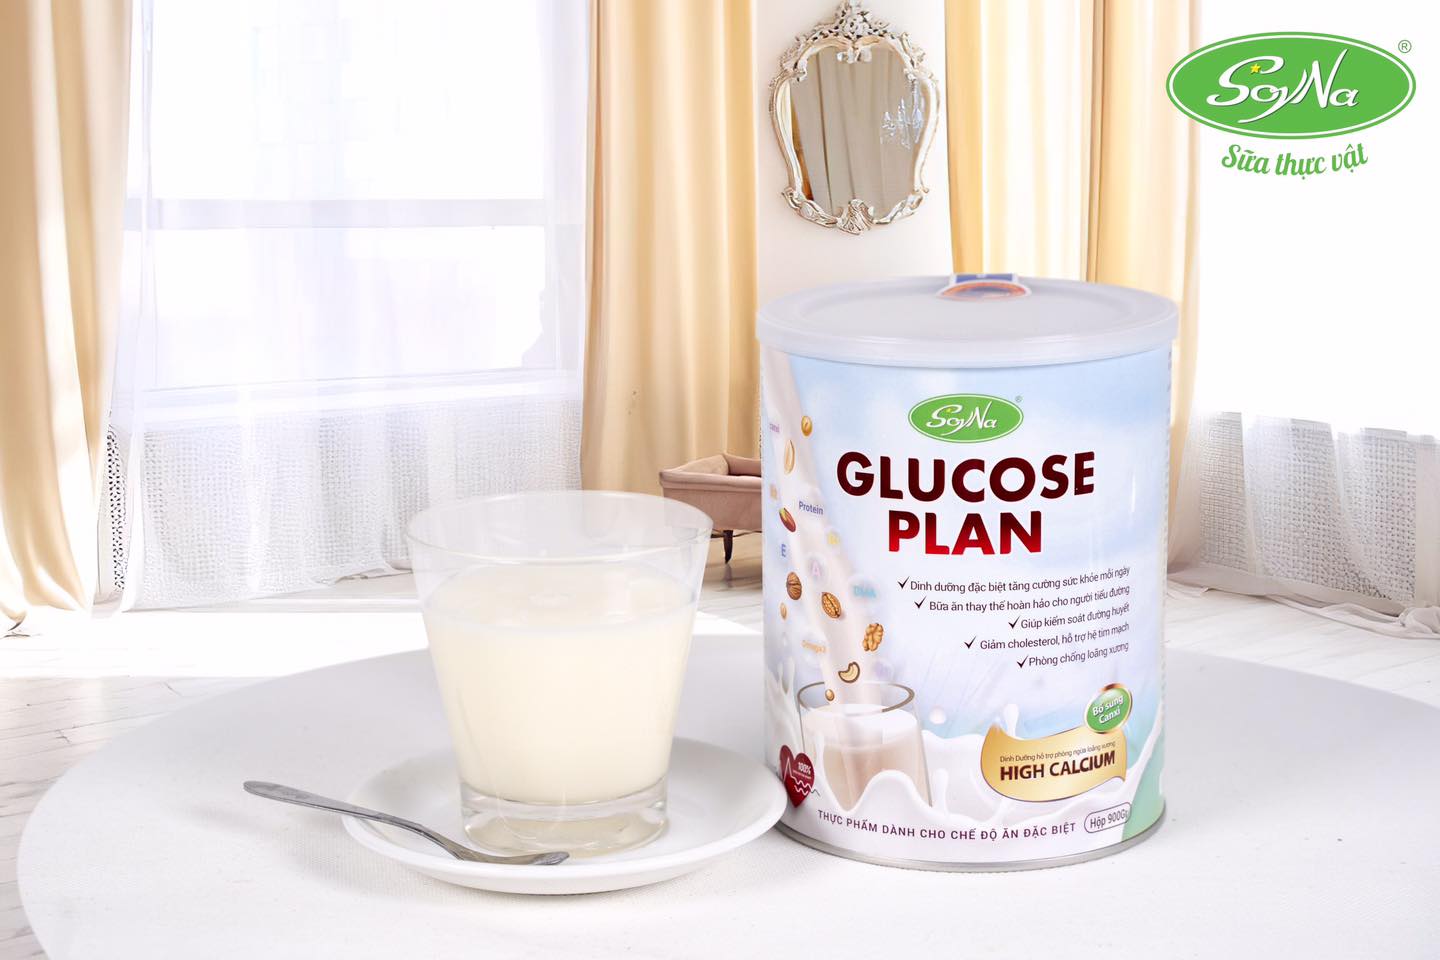 Sữa thực vật Glucose Plan Canxi Soyna